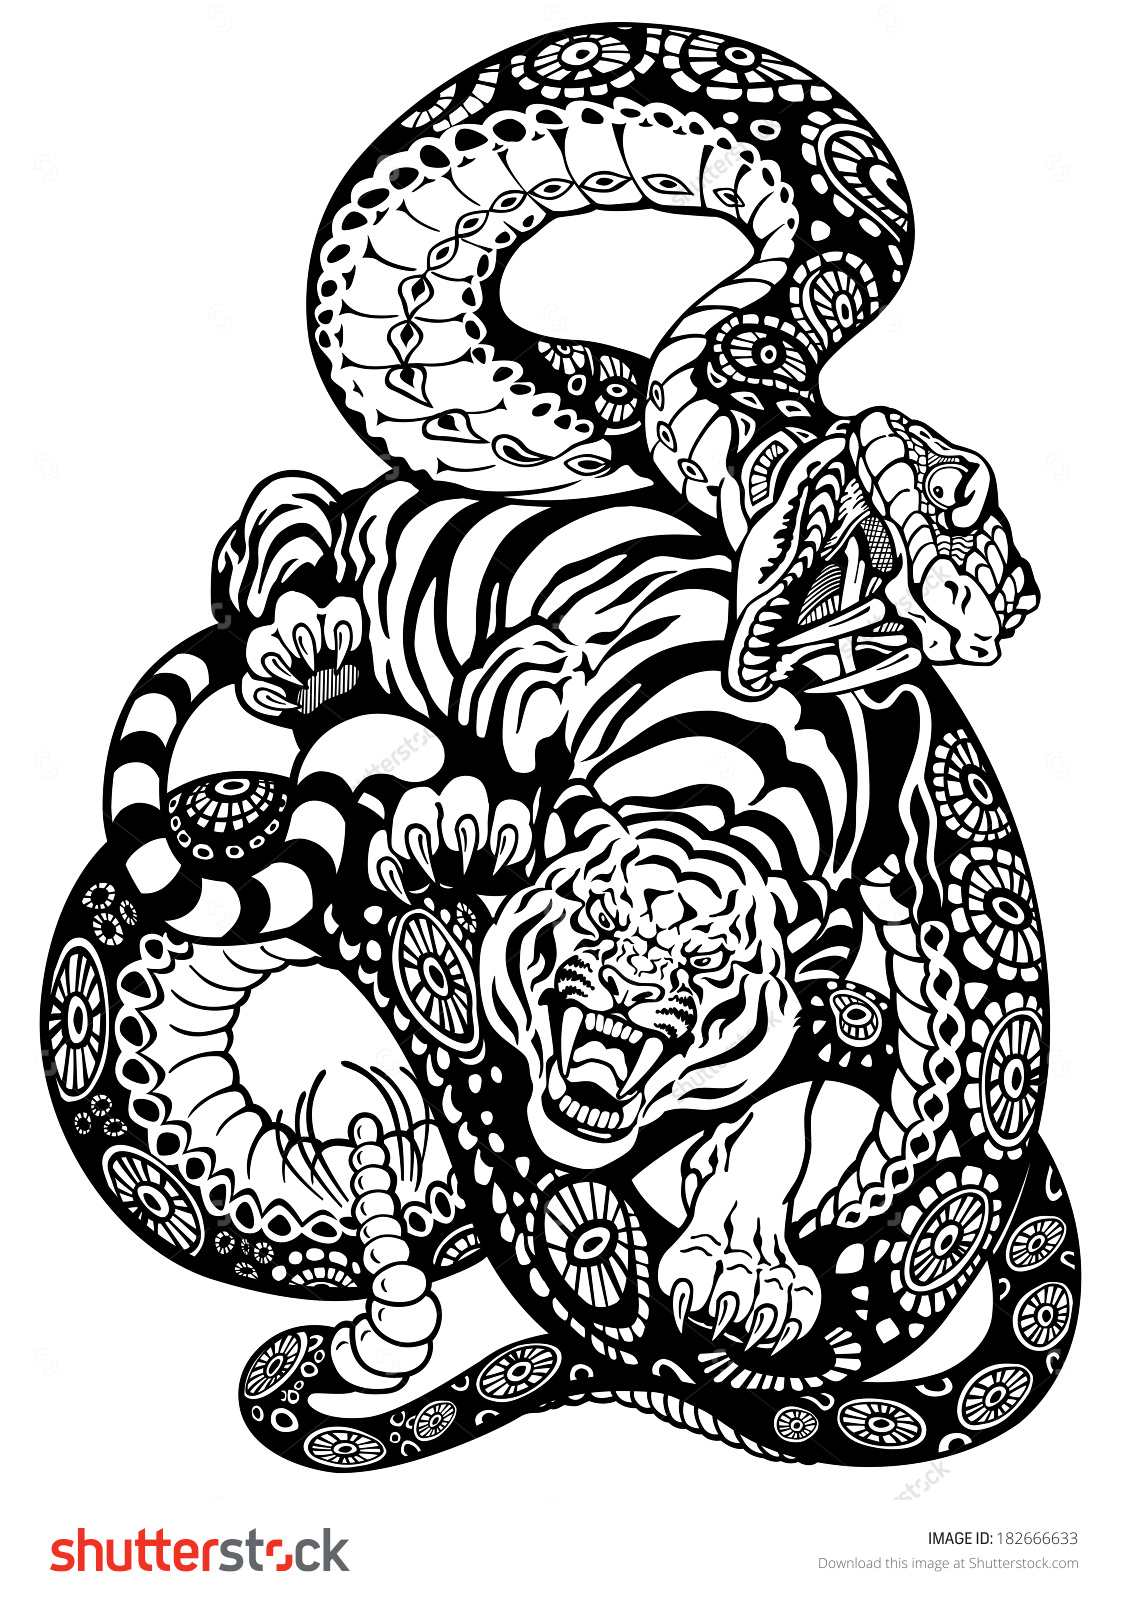 Tiger Snake coloring #4, Download drawings